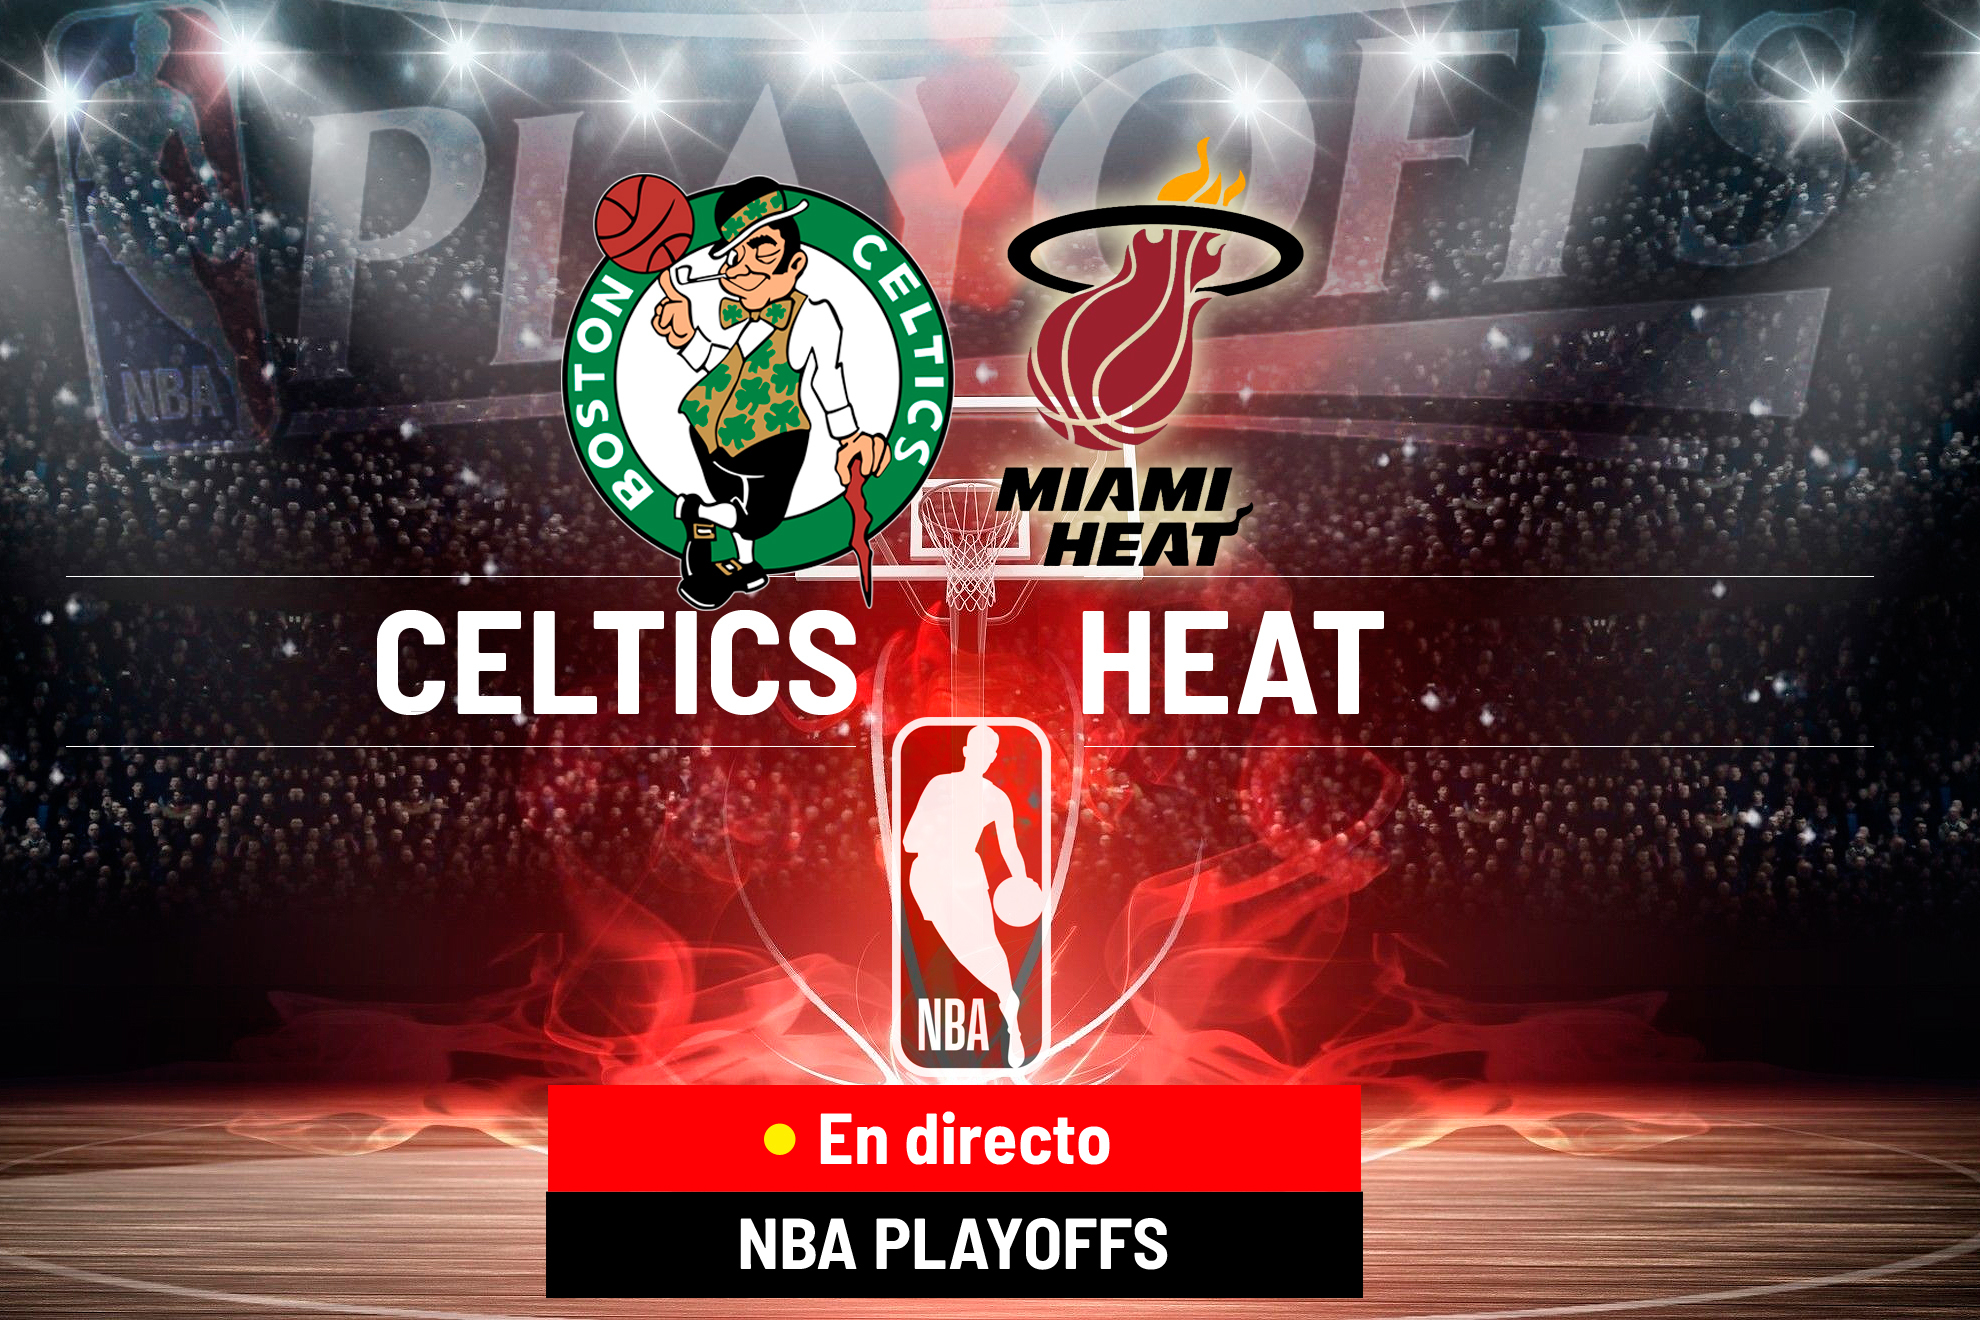 Celtics - Heat en directo